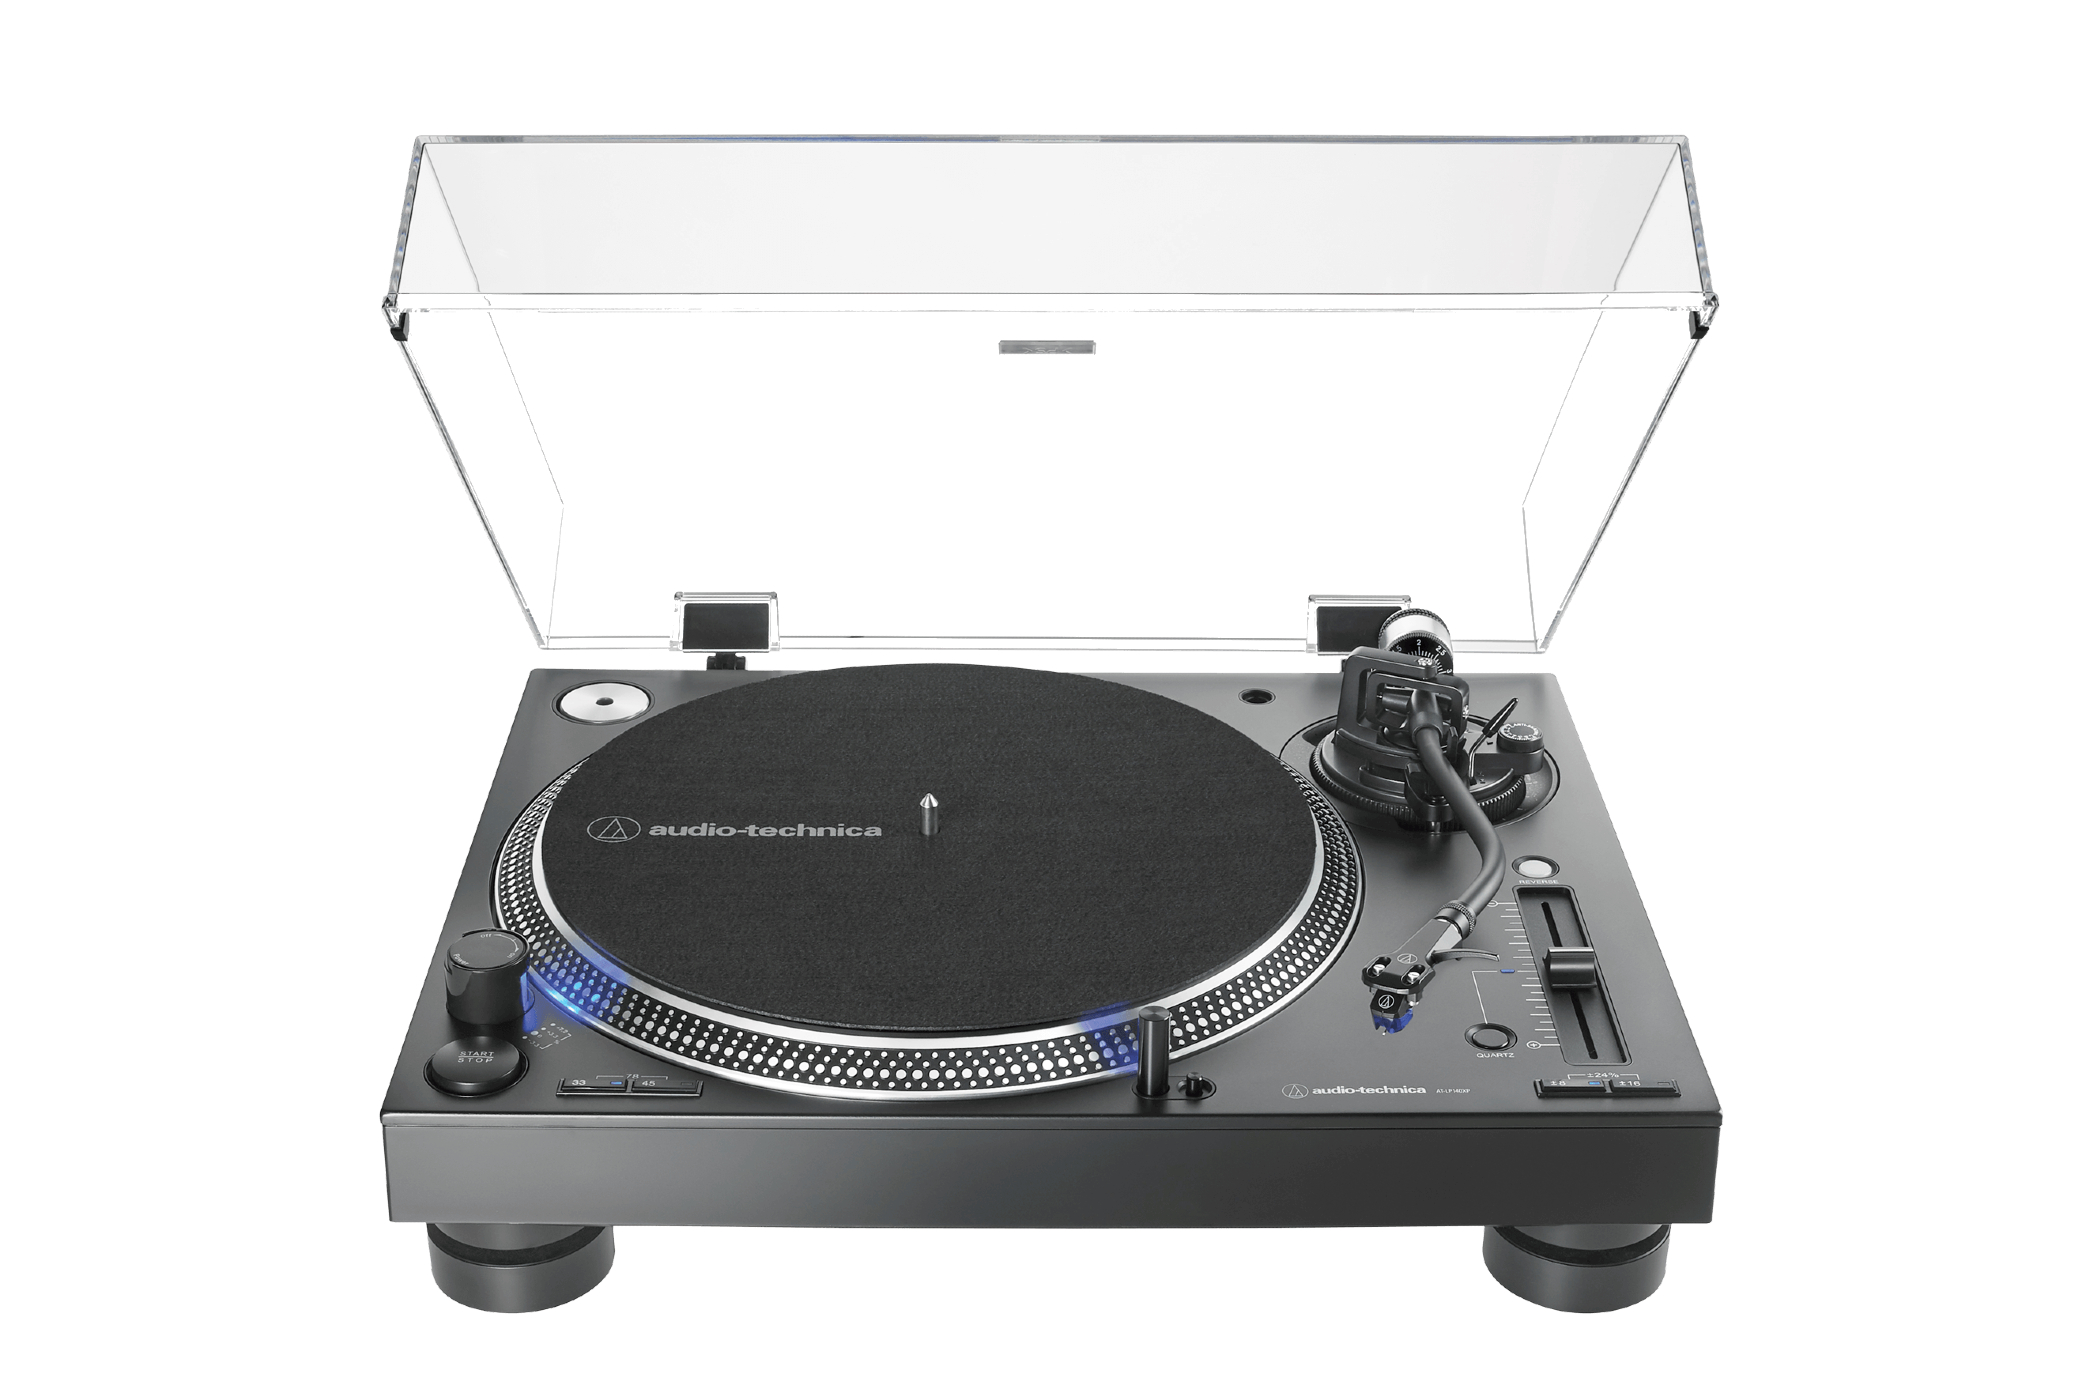 The Audio-Technica At-LP14XP DJ turntable. 